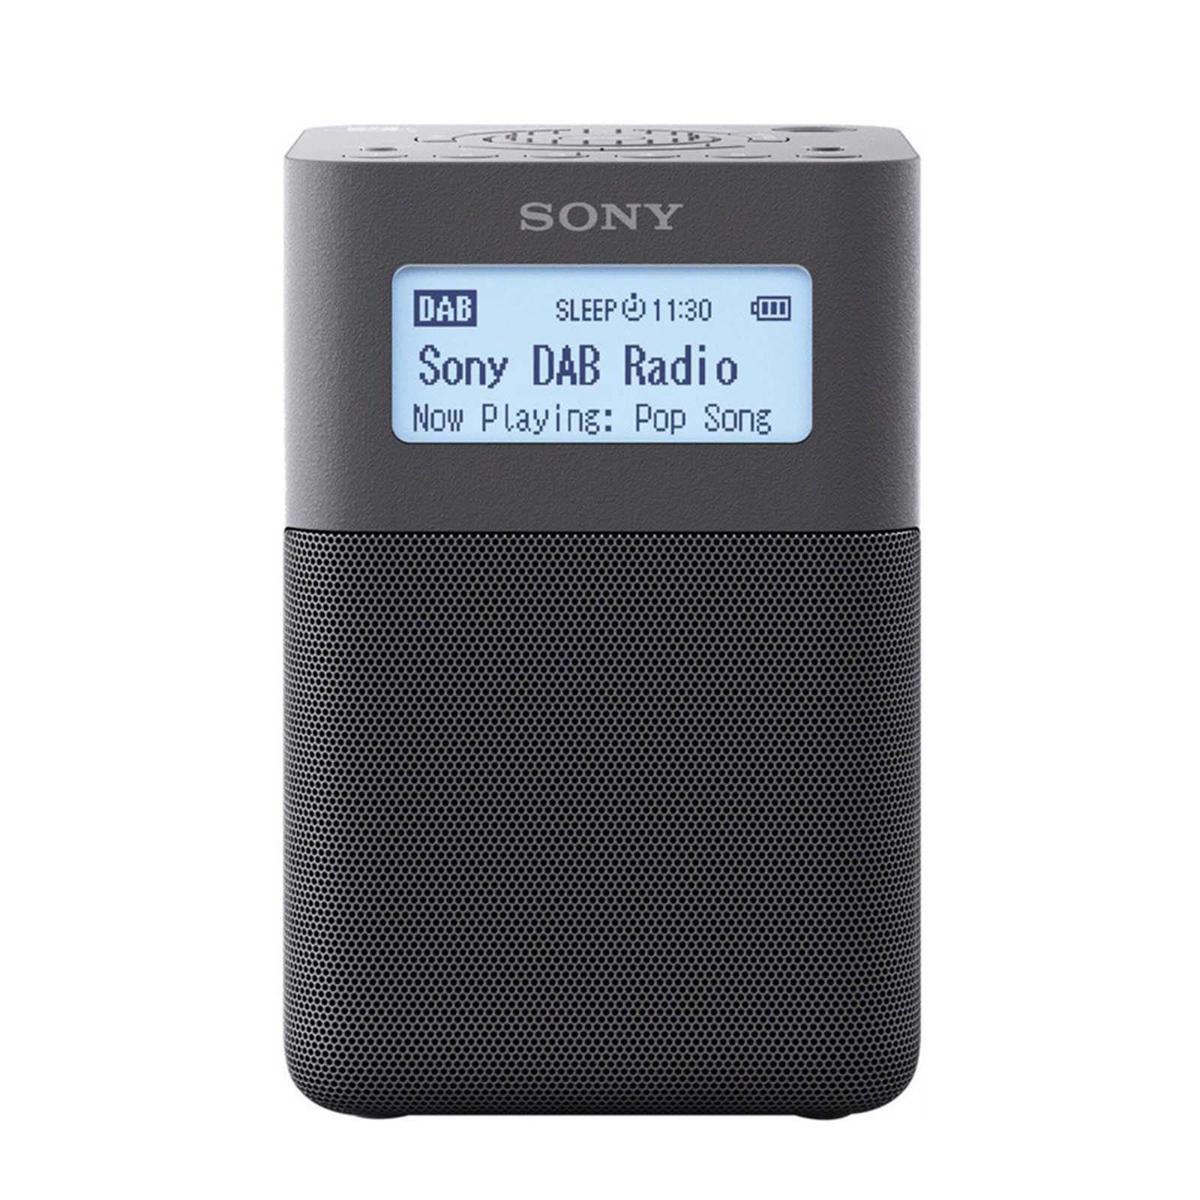 Deuk Nuttig Zoeken Sony XDR-V20D draagbare DAB radio grijs | wehkamp